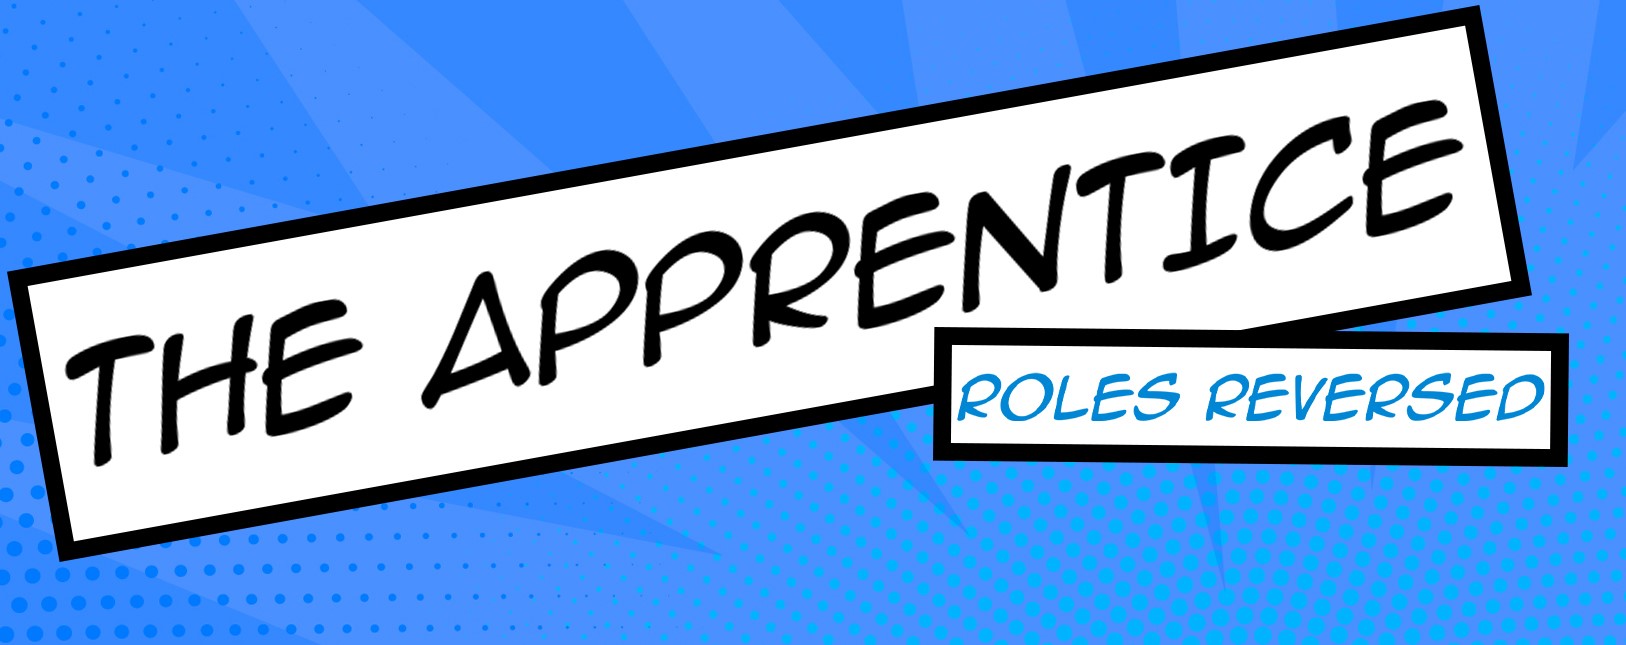 The Apprentice Roles Reversed